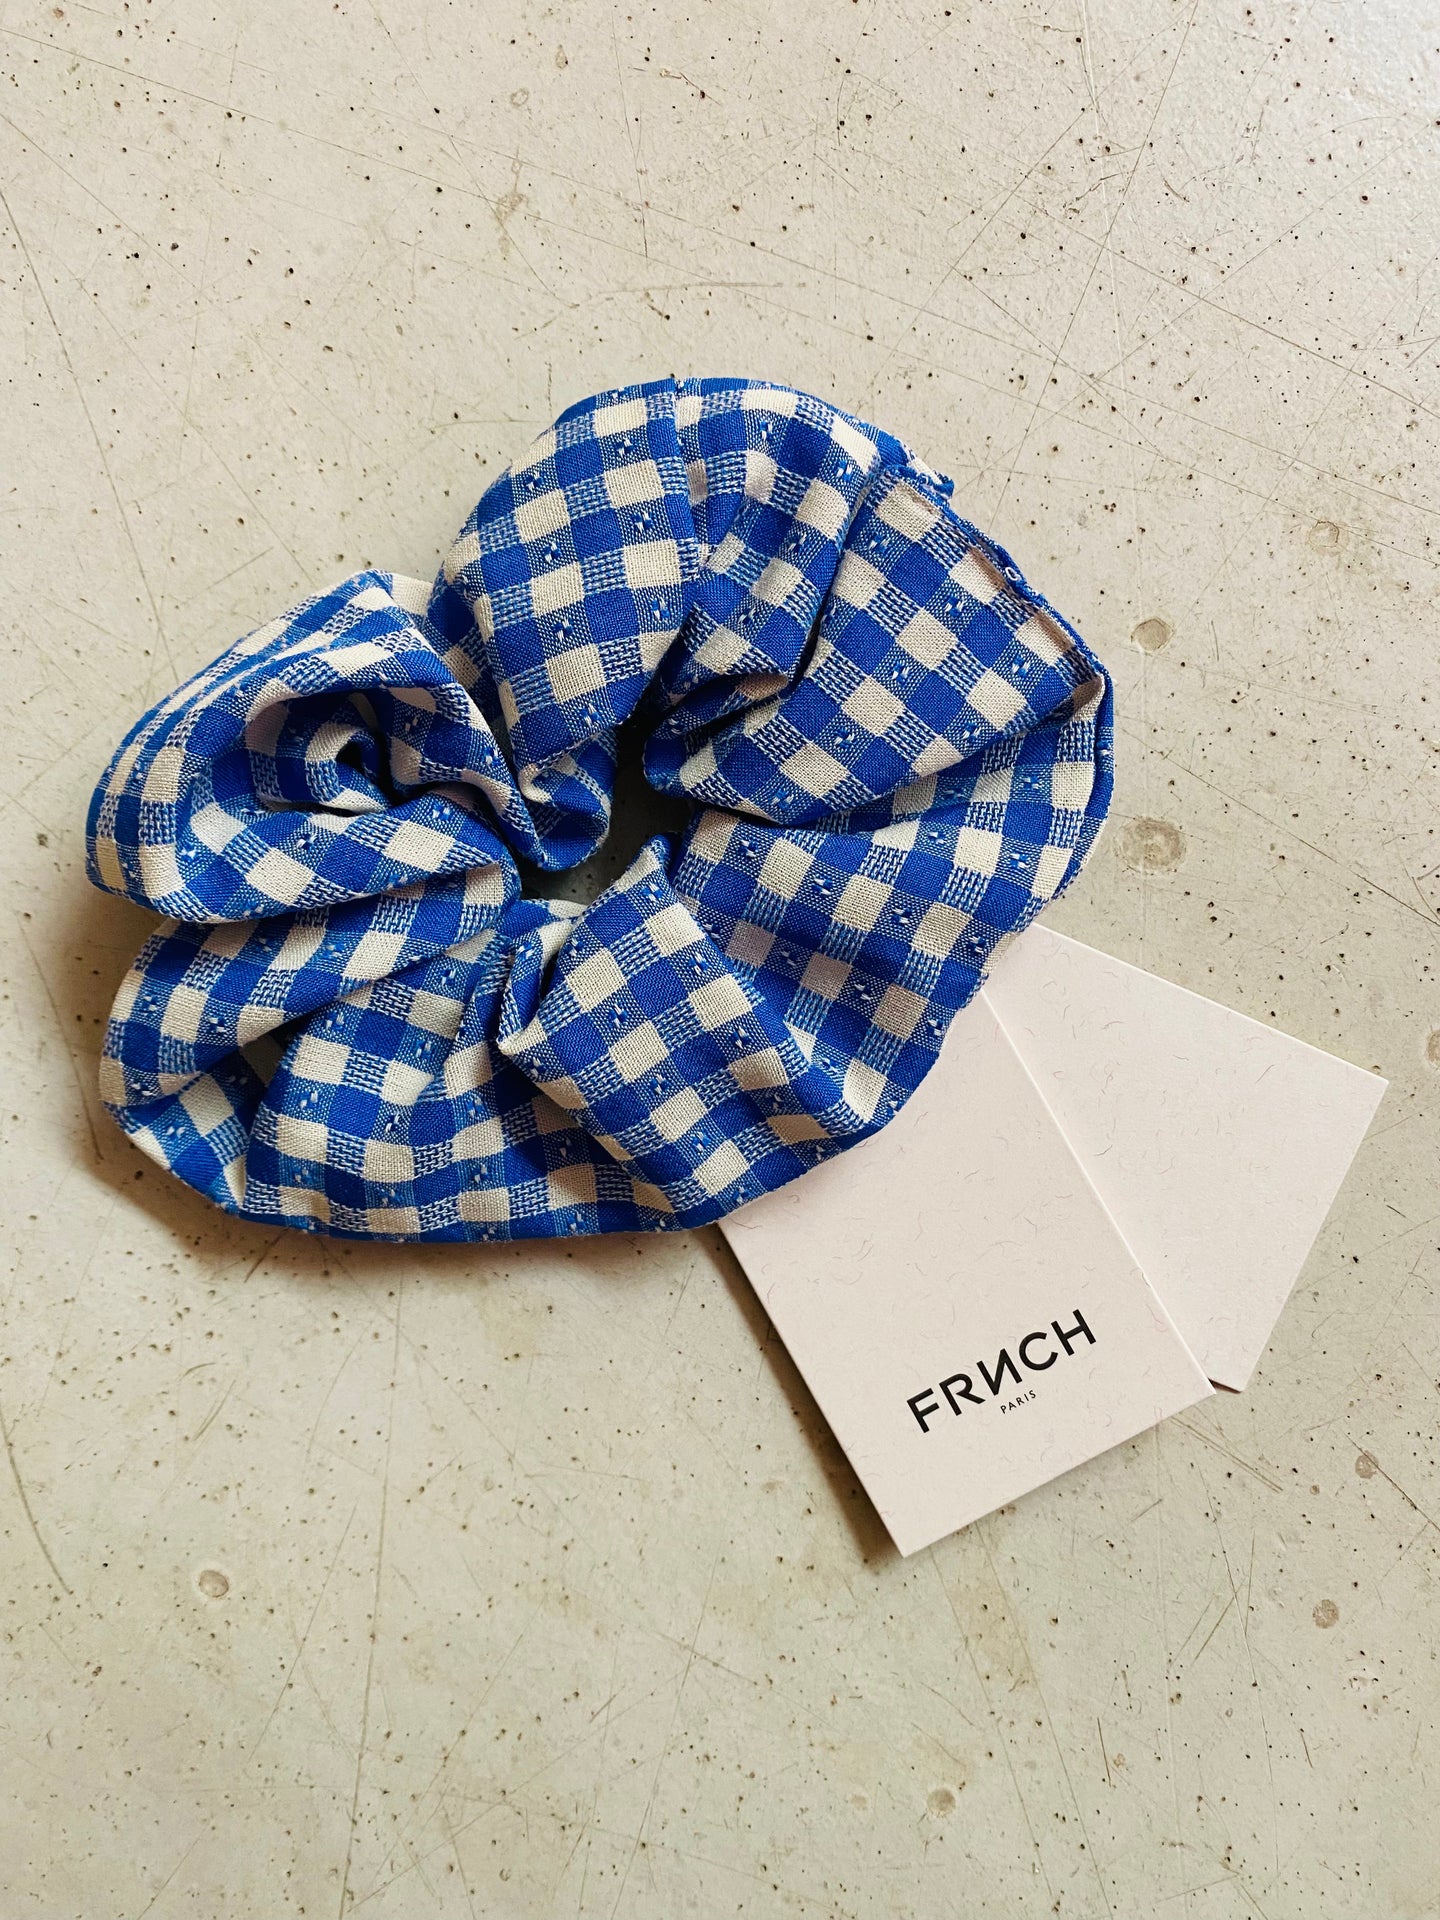 FRNCH Paris - Scrunchie / Chouchou check blue